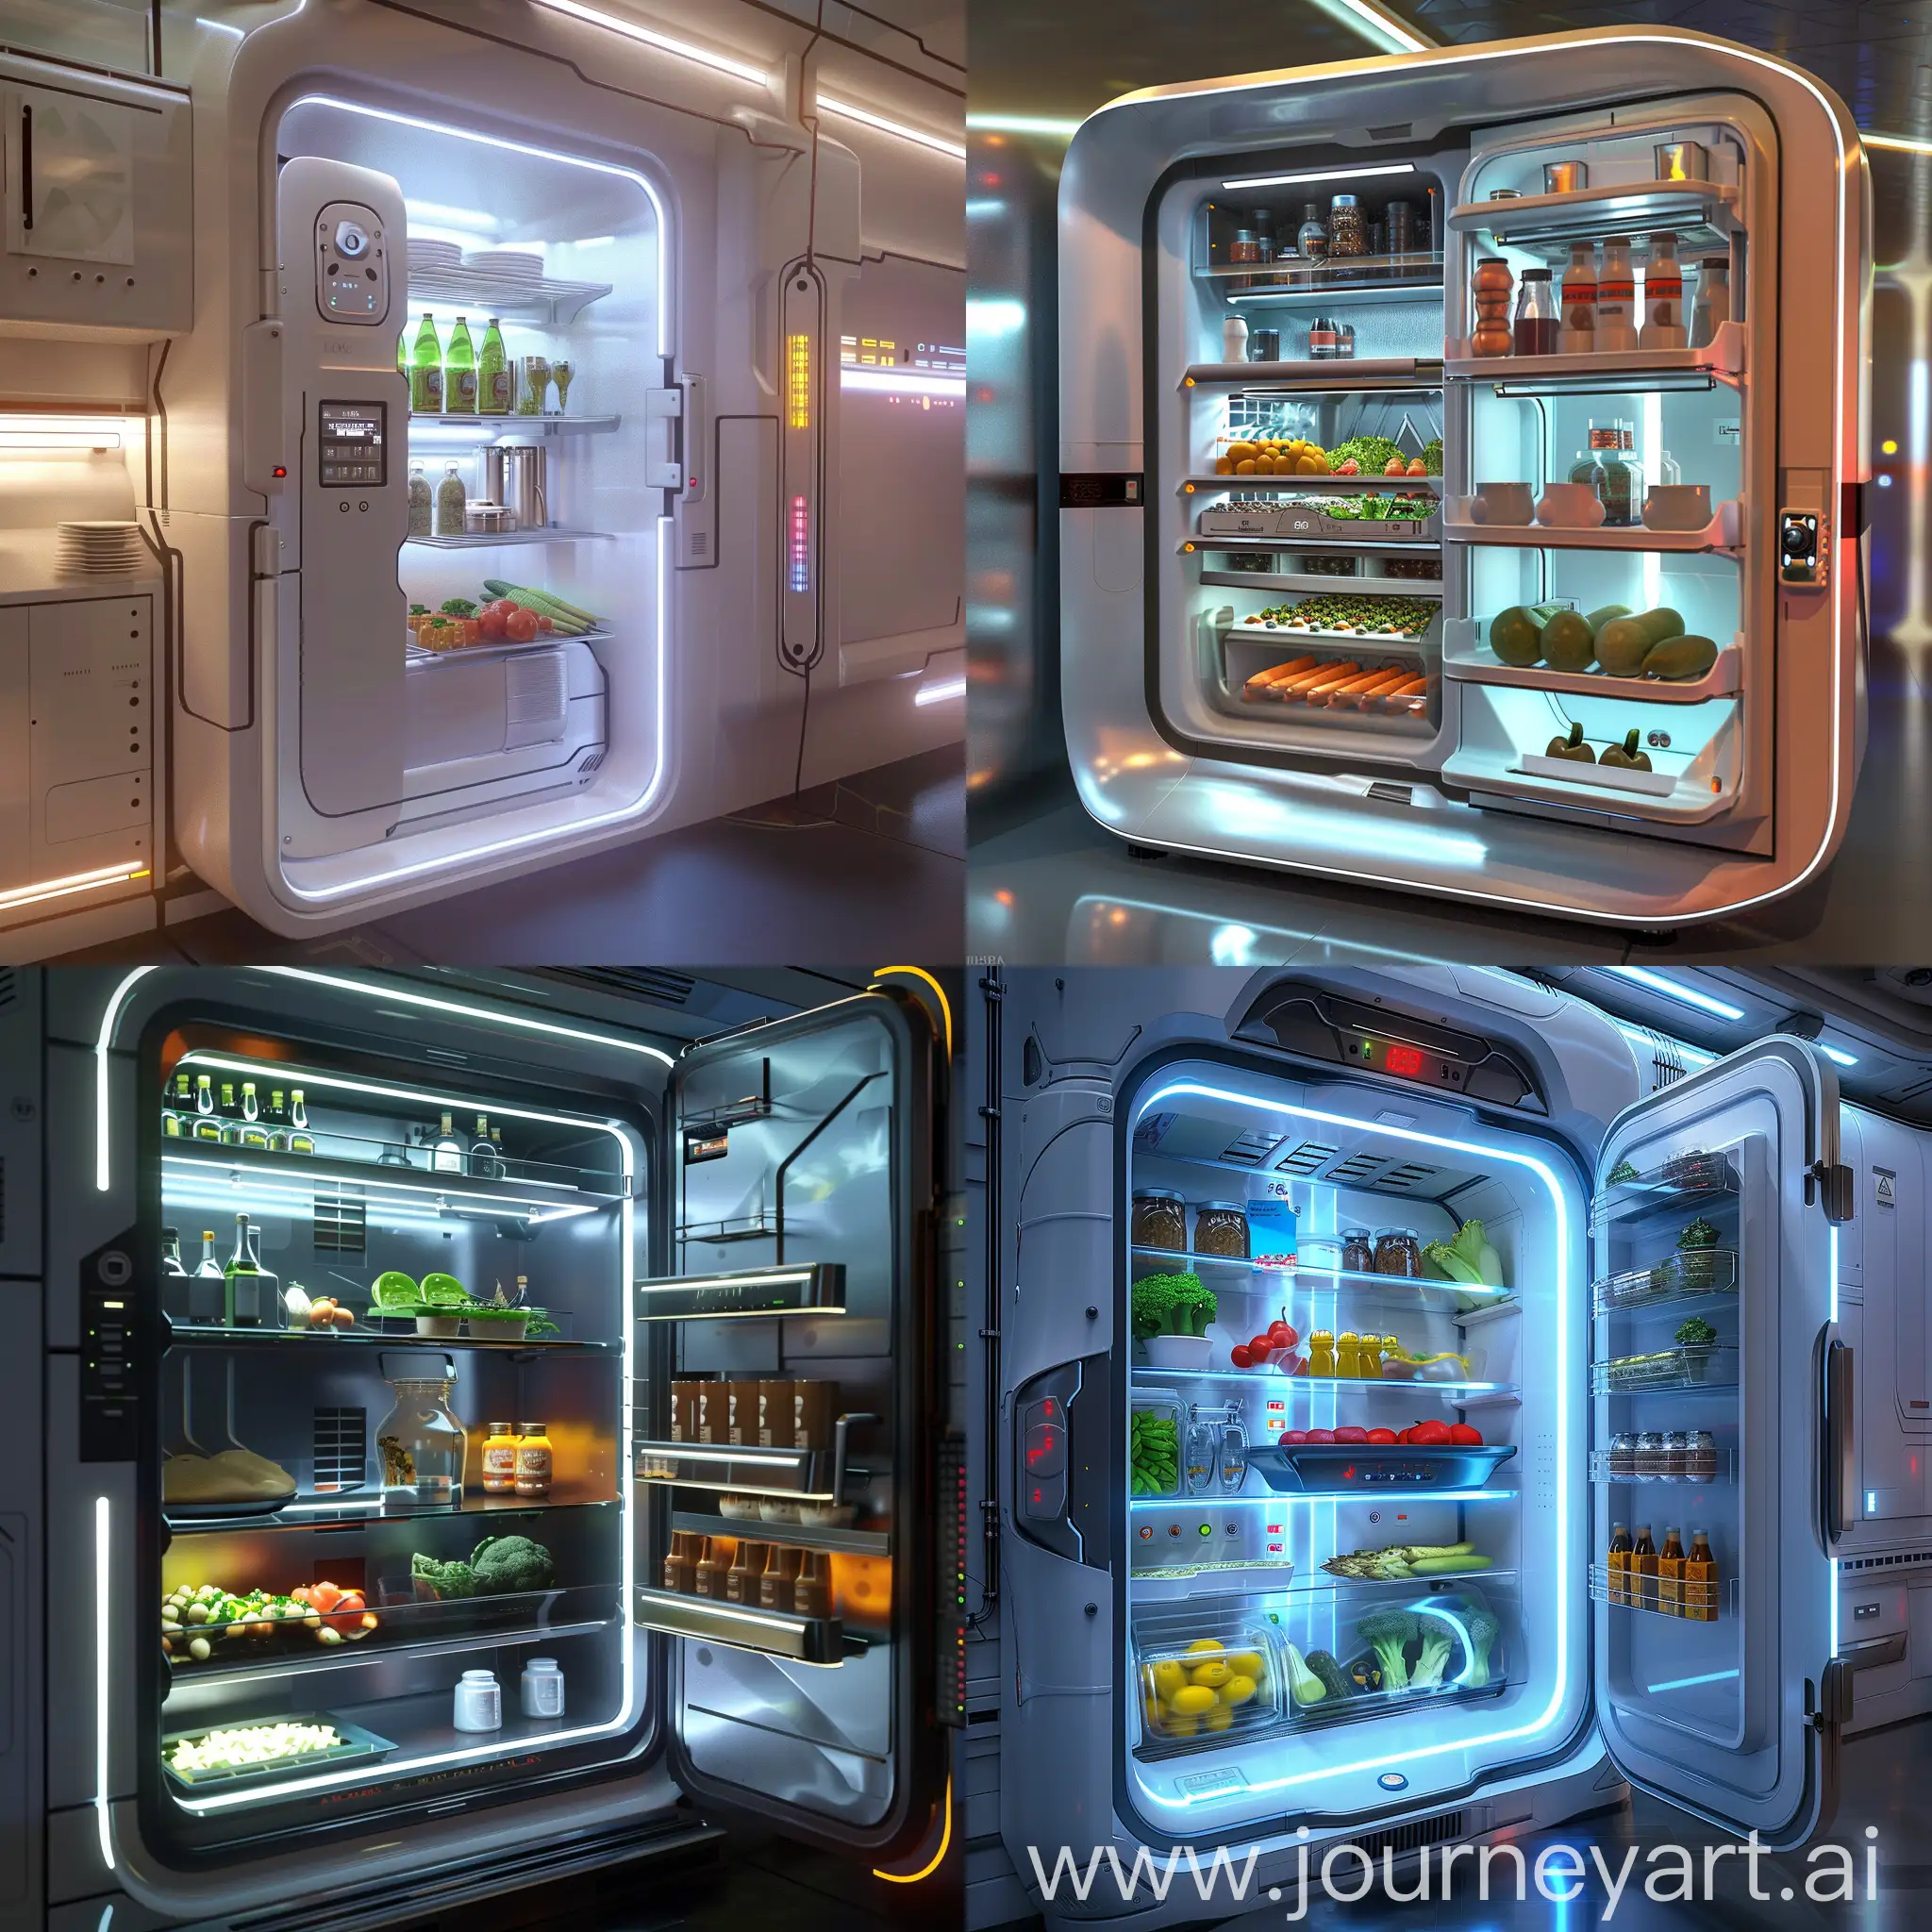 Futuristic-Quantum-Refrigerator-with-Modular-Shelving-and-3D-Food-Printing-Integration